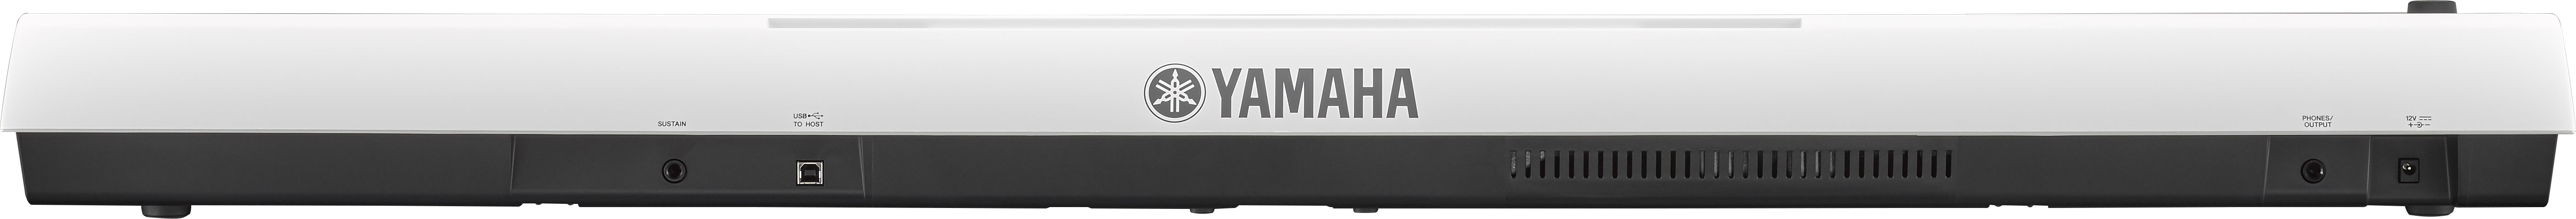 Yamaha Np-32 - White - Portable digital piano - Variation 1